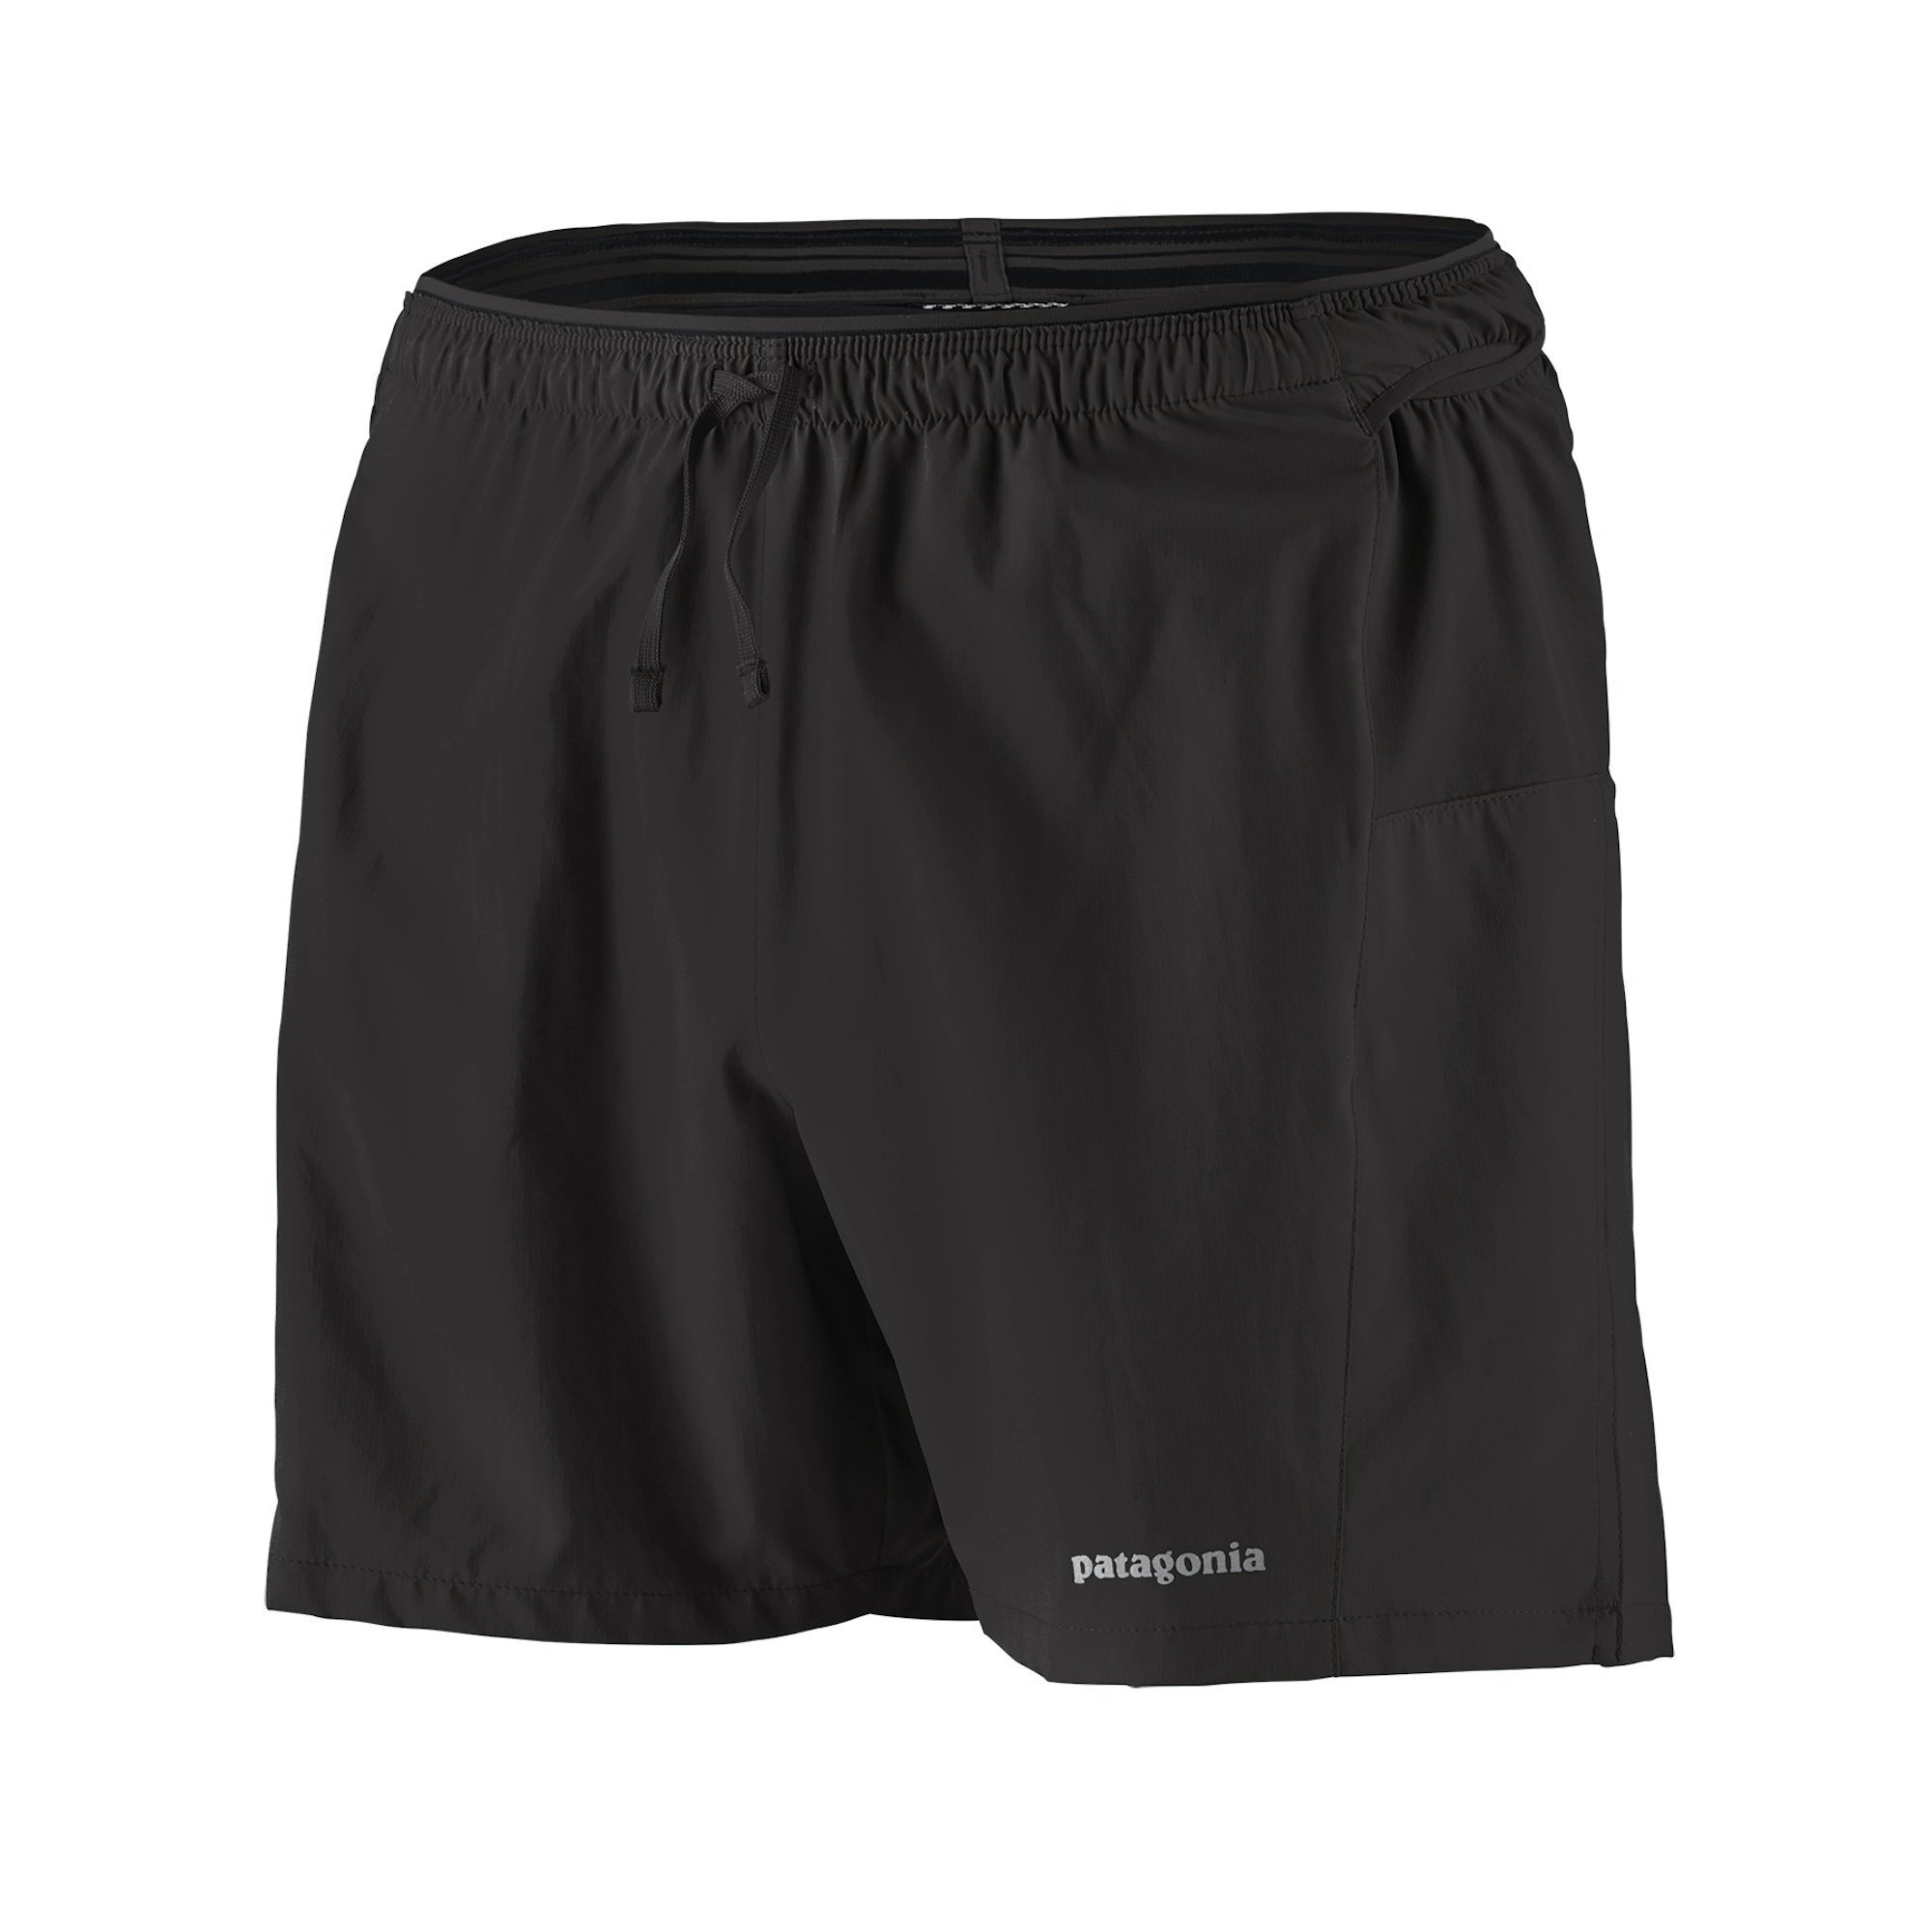 Patagonia Men's Strider Pro Running Shorts - Inseam 5", Black / S